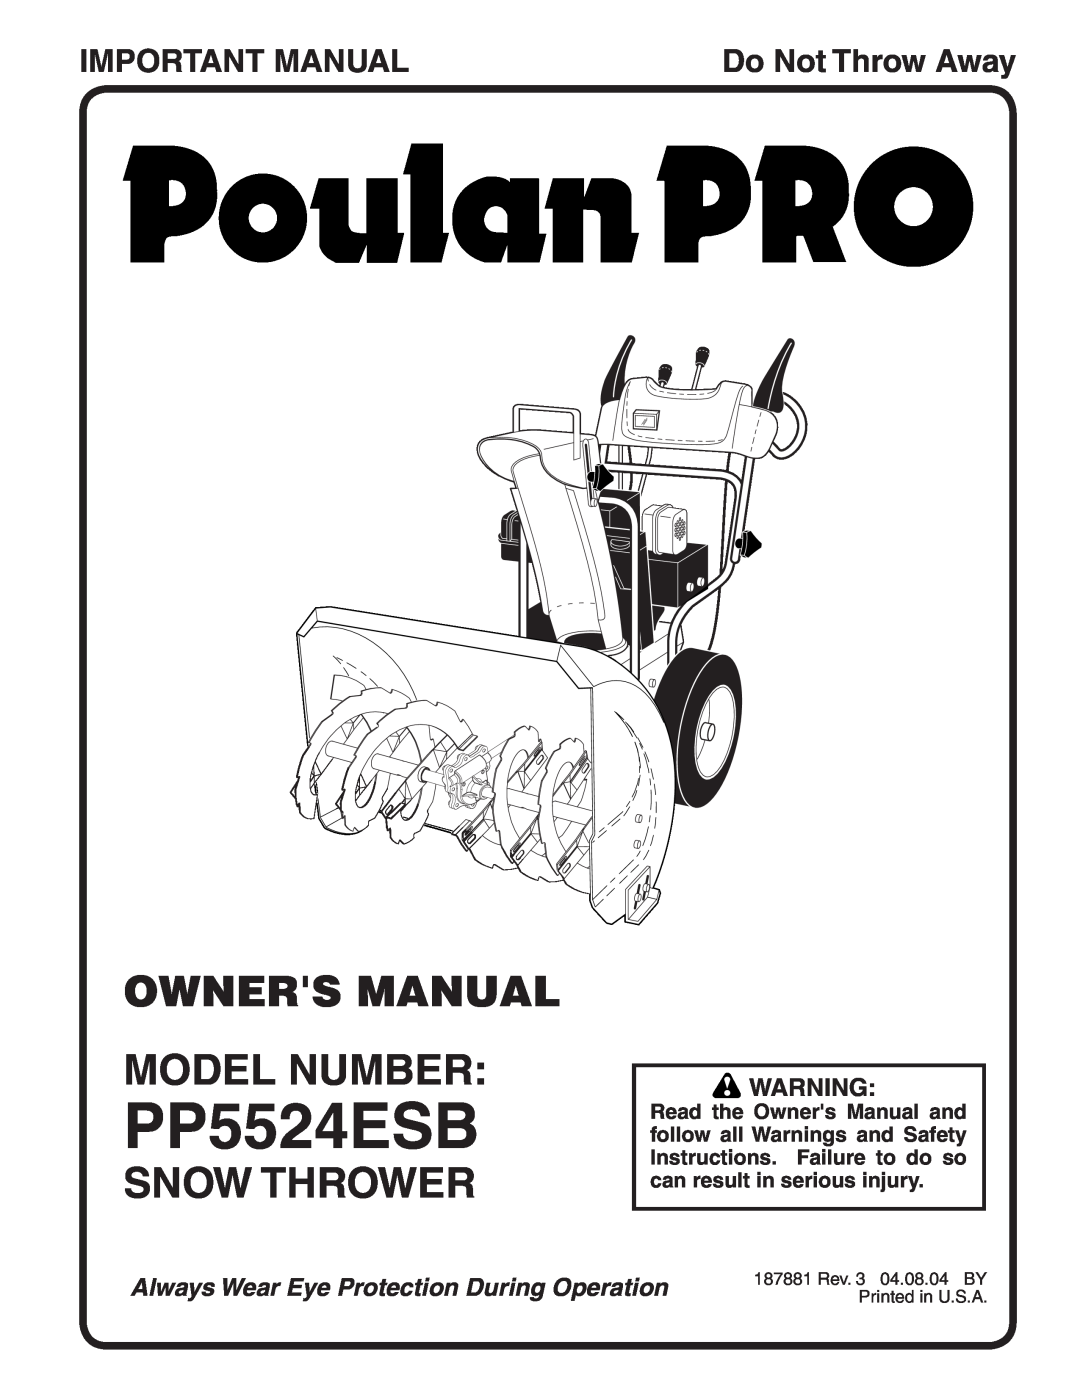 Poulan 187881 owner manual Snow Thrower, Important Manual, PP5524ESB, Do Not Throw Away 